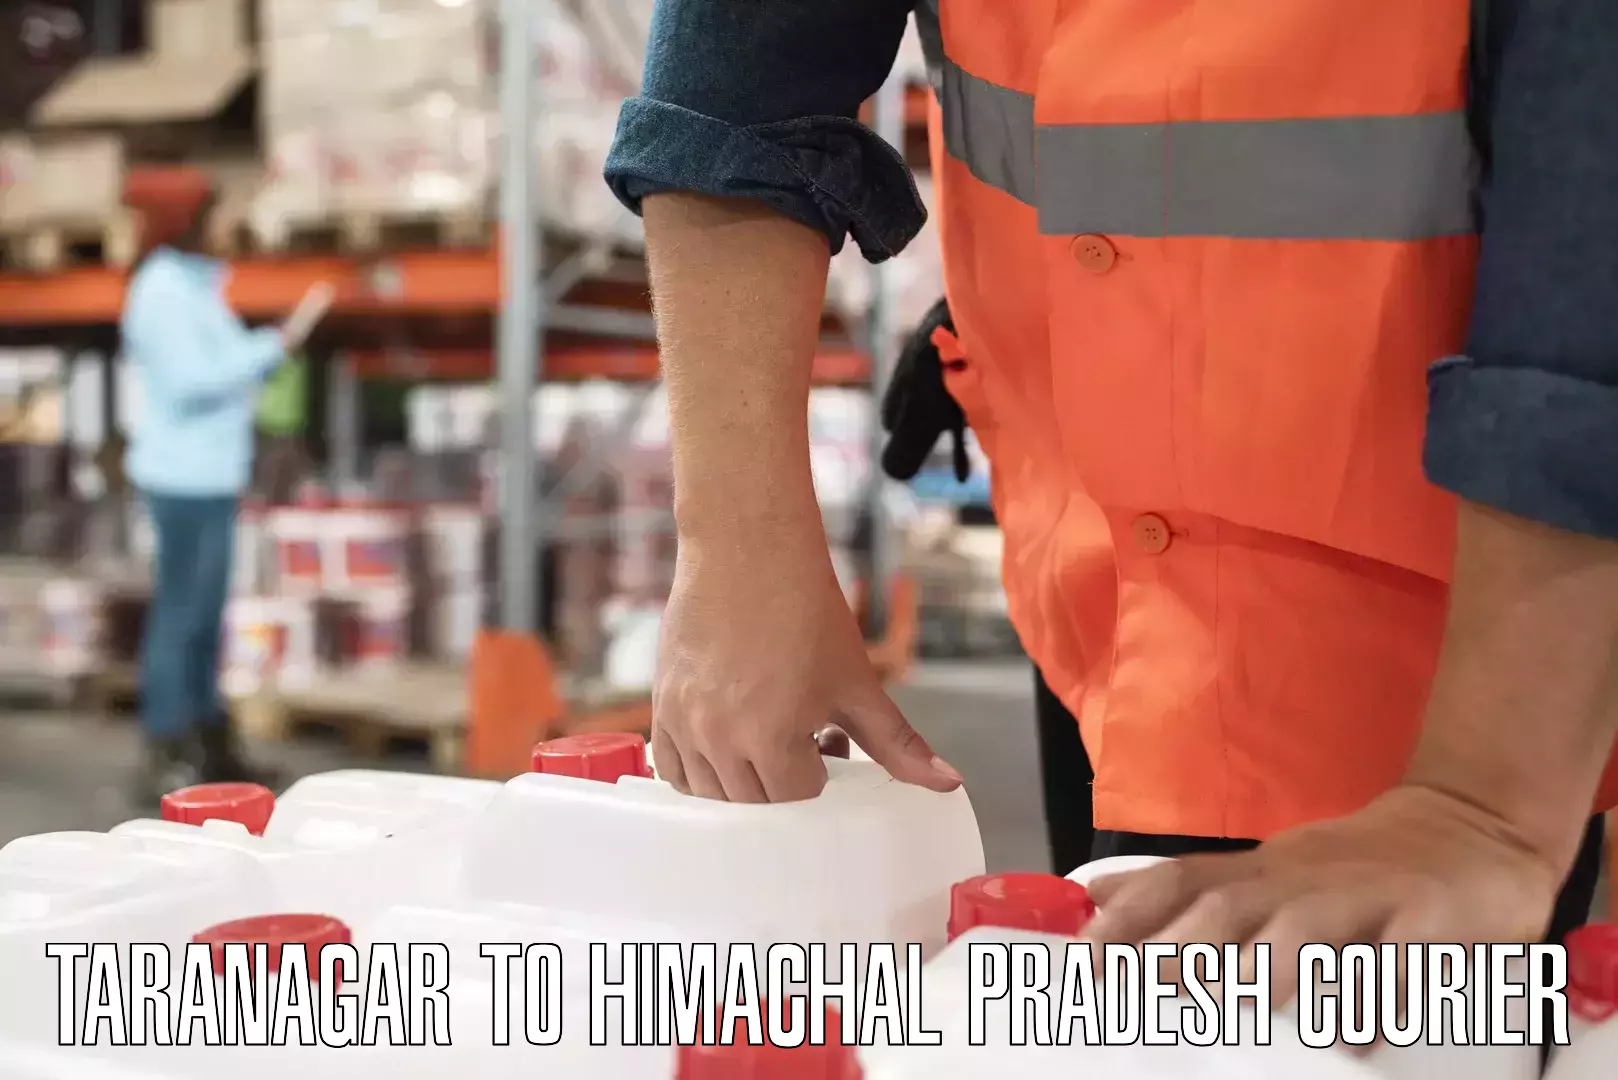 Global delivery options Taranagar to Himachal Pradesh